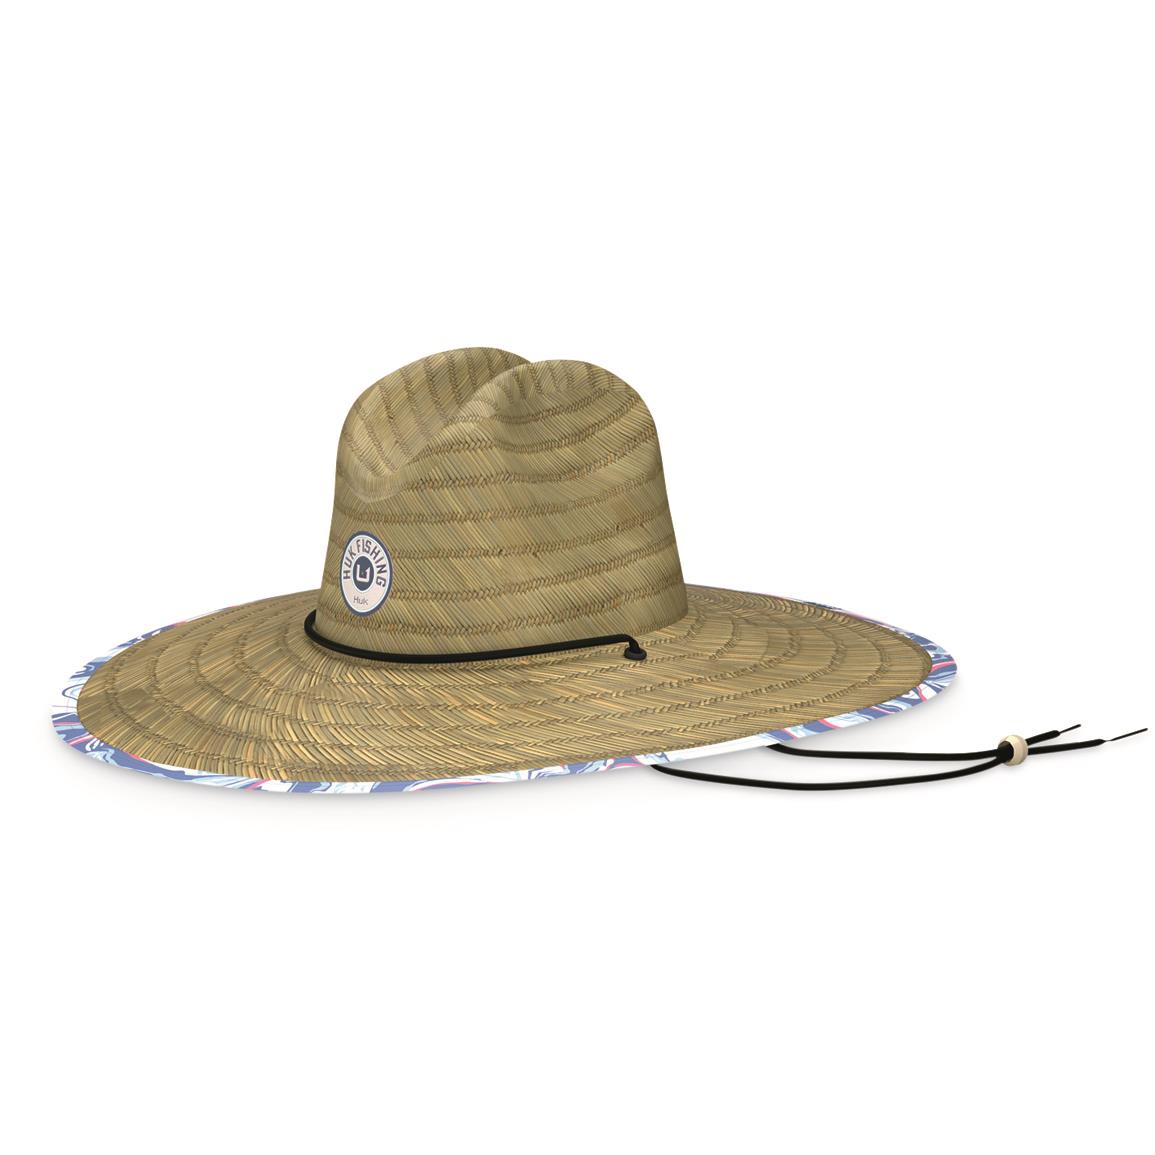 Huk Women's Brackish Flow Straw Hat, Crystal Blue